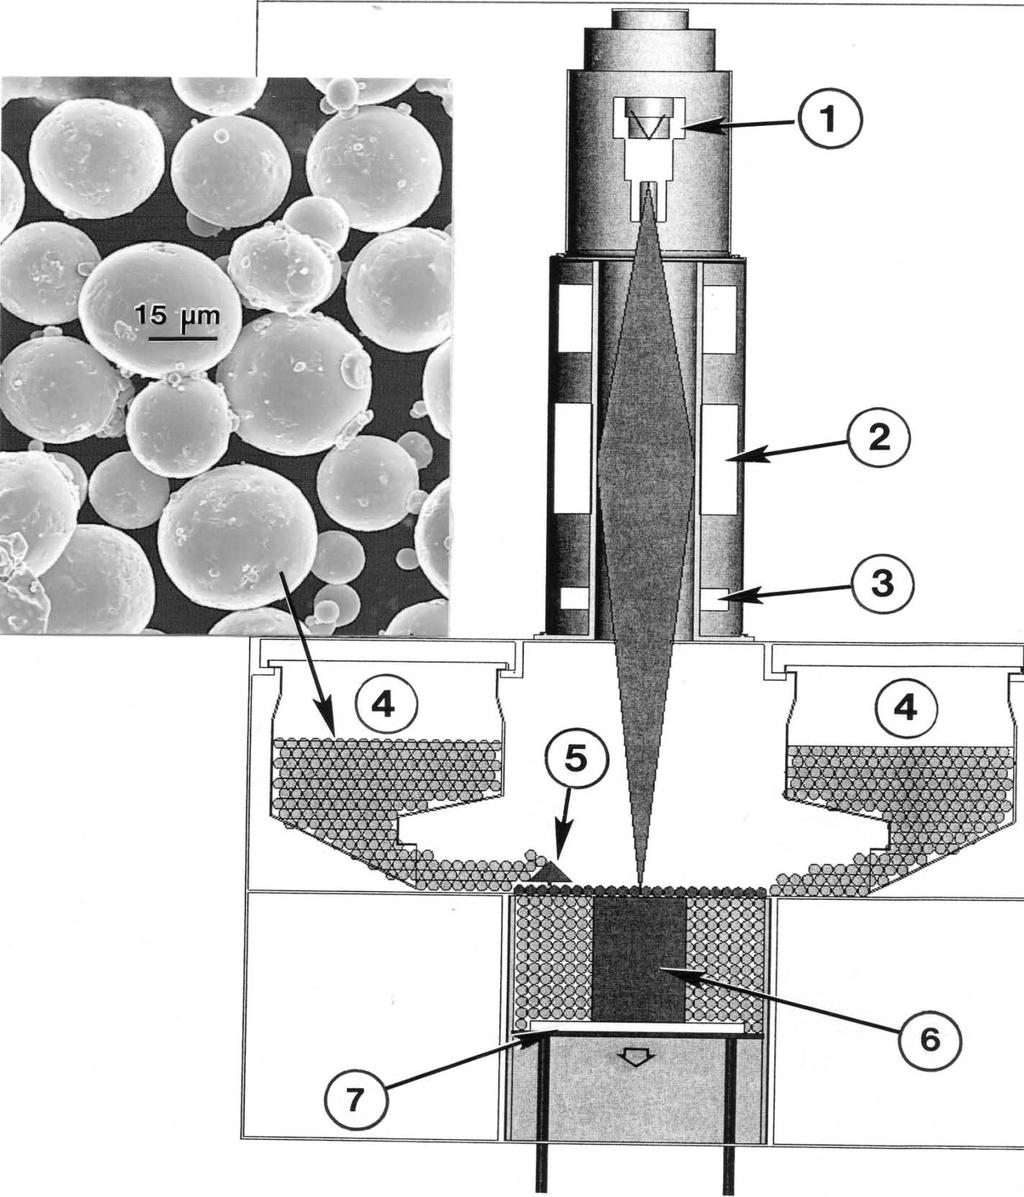 Figure 1. EBM schematic and SEM view of precursor powder (insert).